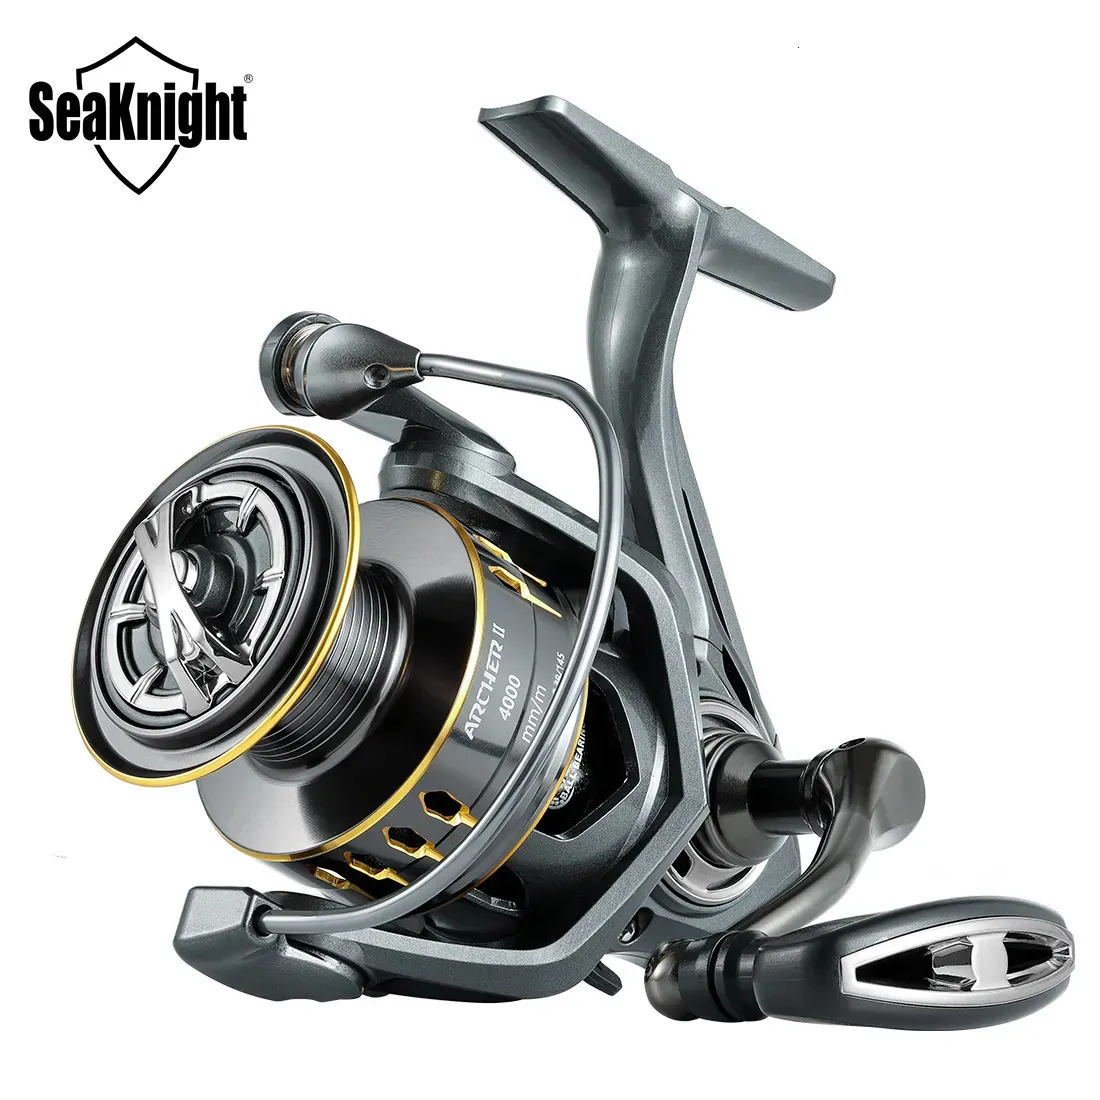 Fly Fishing Reels2 SeaKnight Brand ARCHER2 Series Reel 52 1 49 MAX Drag Power 28lbs Aluminum Spool Fish Alarm Spinning 20006000 231011